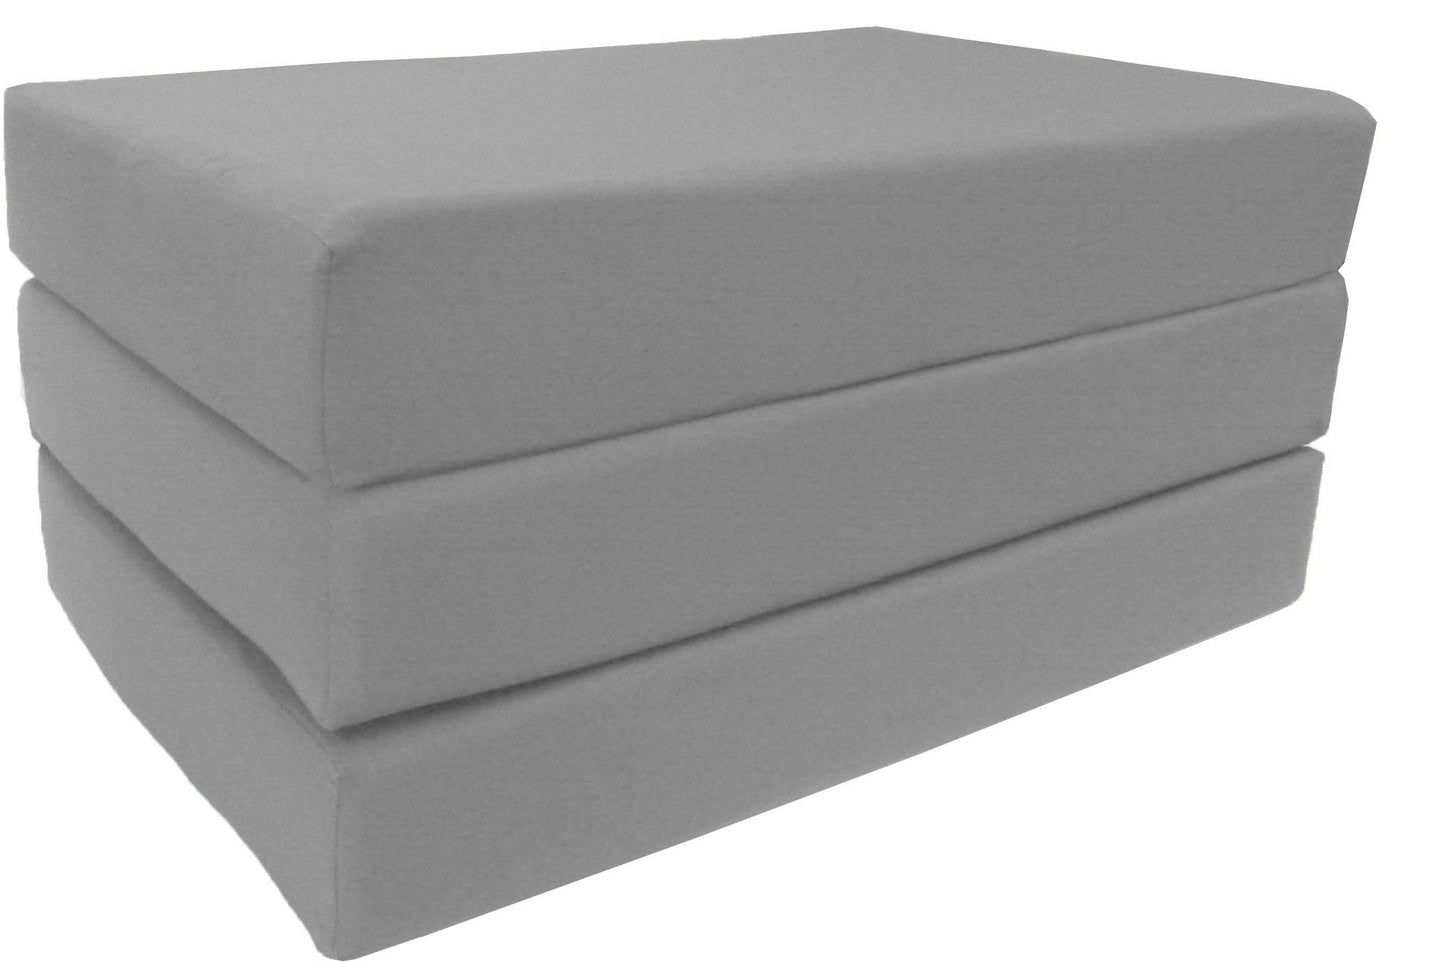 Tri Fold Foam Beds, Shikibutons, Foldable Ottoman Mattresses, High Foam Density 1.8 lbs